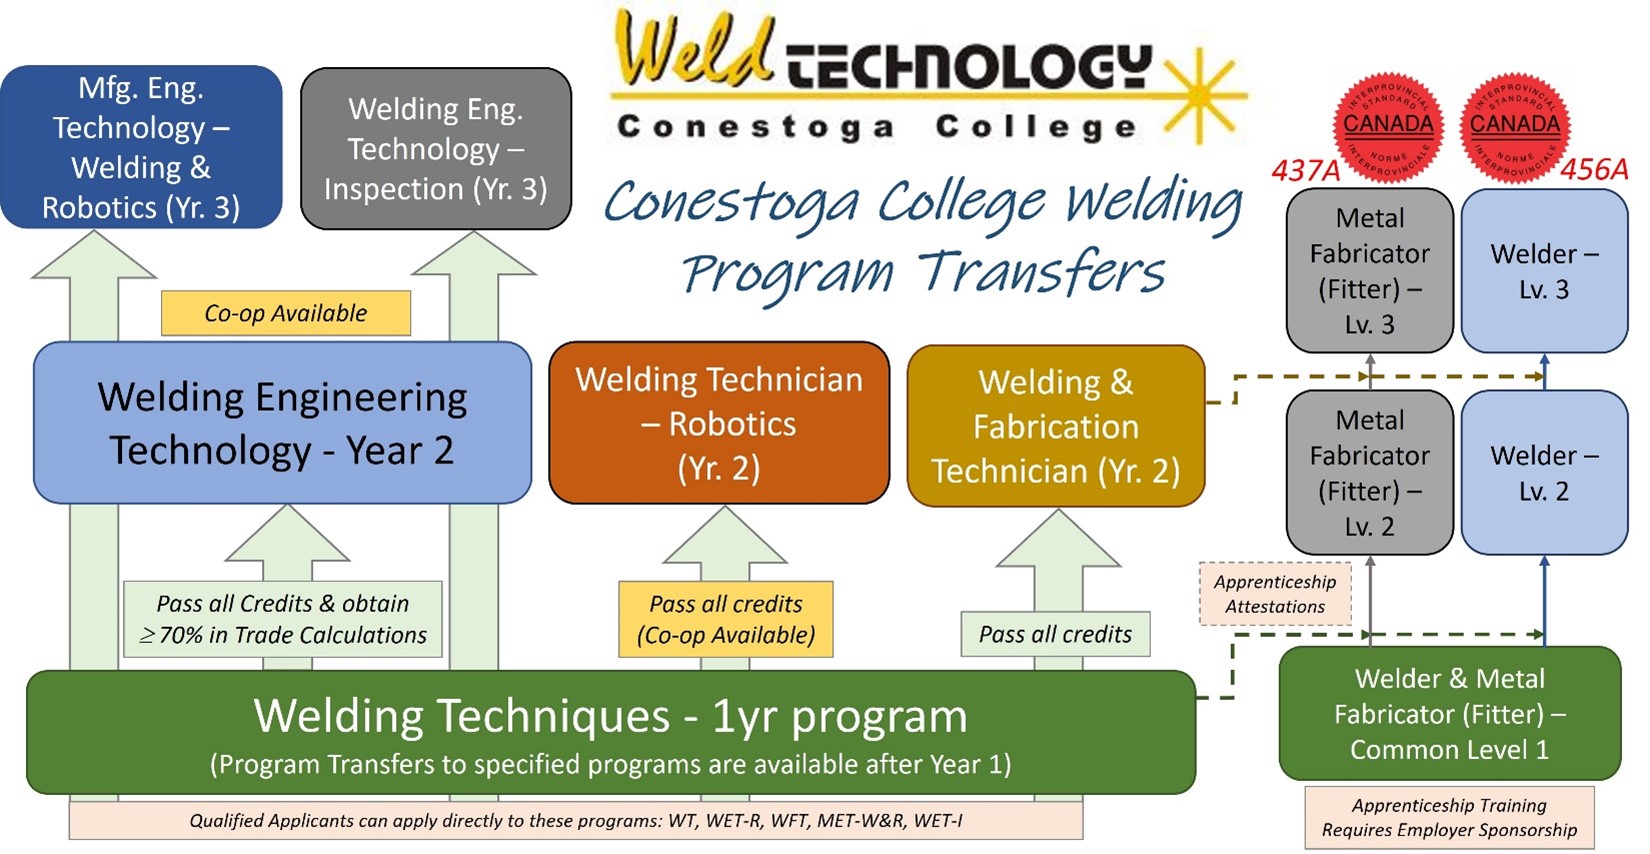 Conestoga Welding program transfers